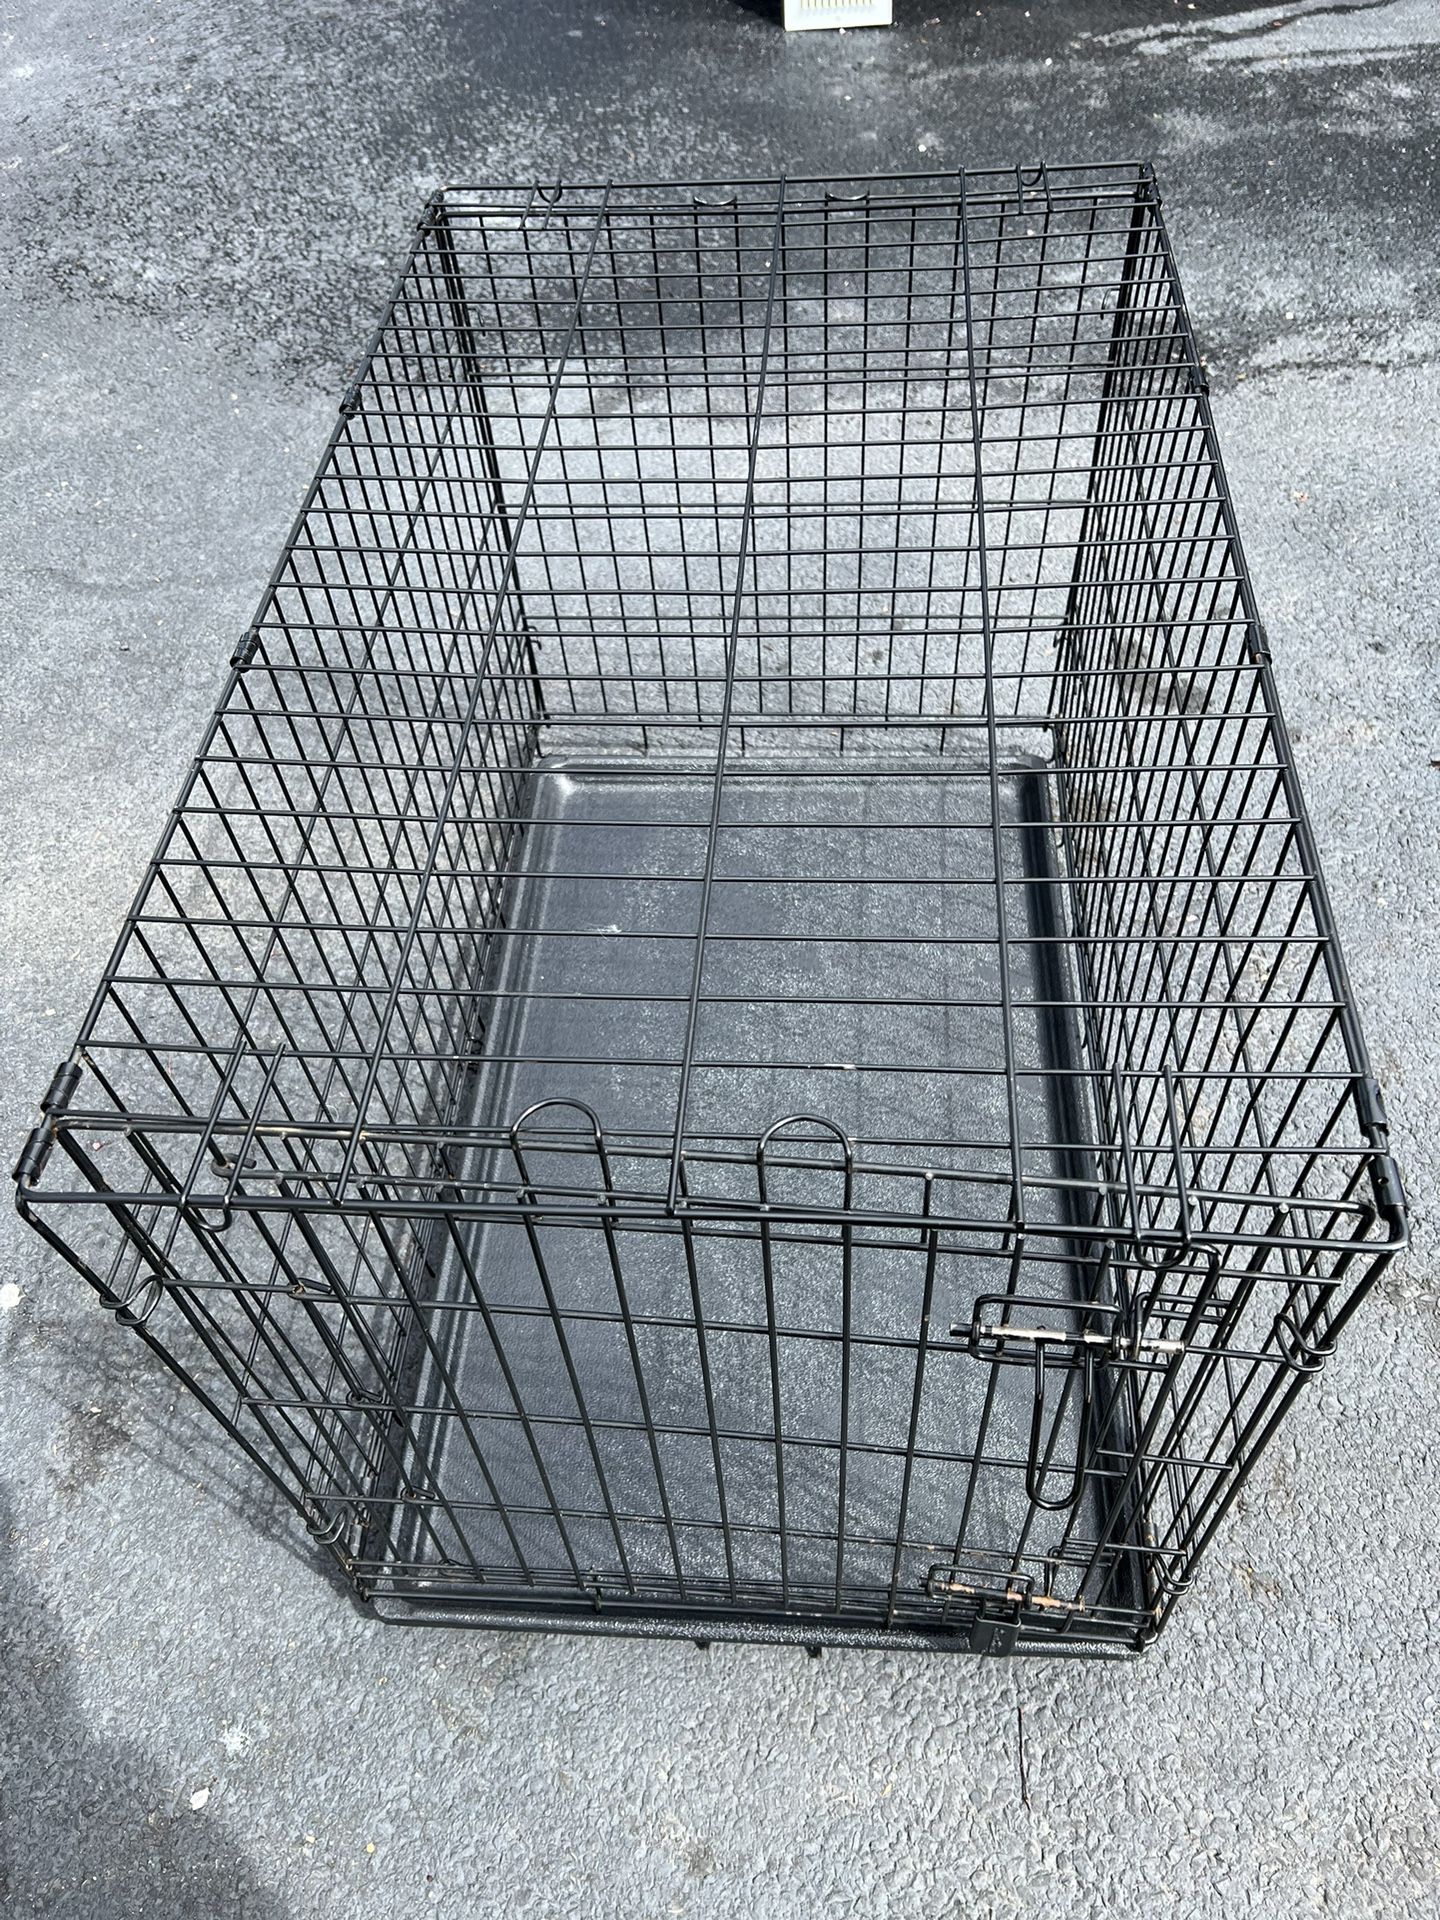 Large Dog Crate 3x 2 Approximately 